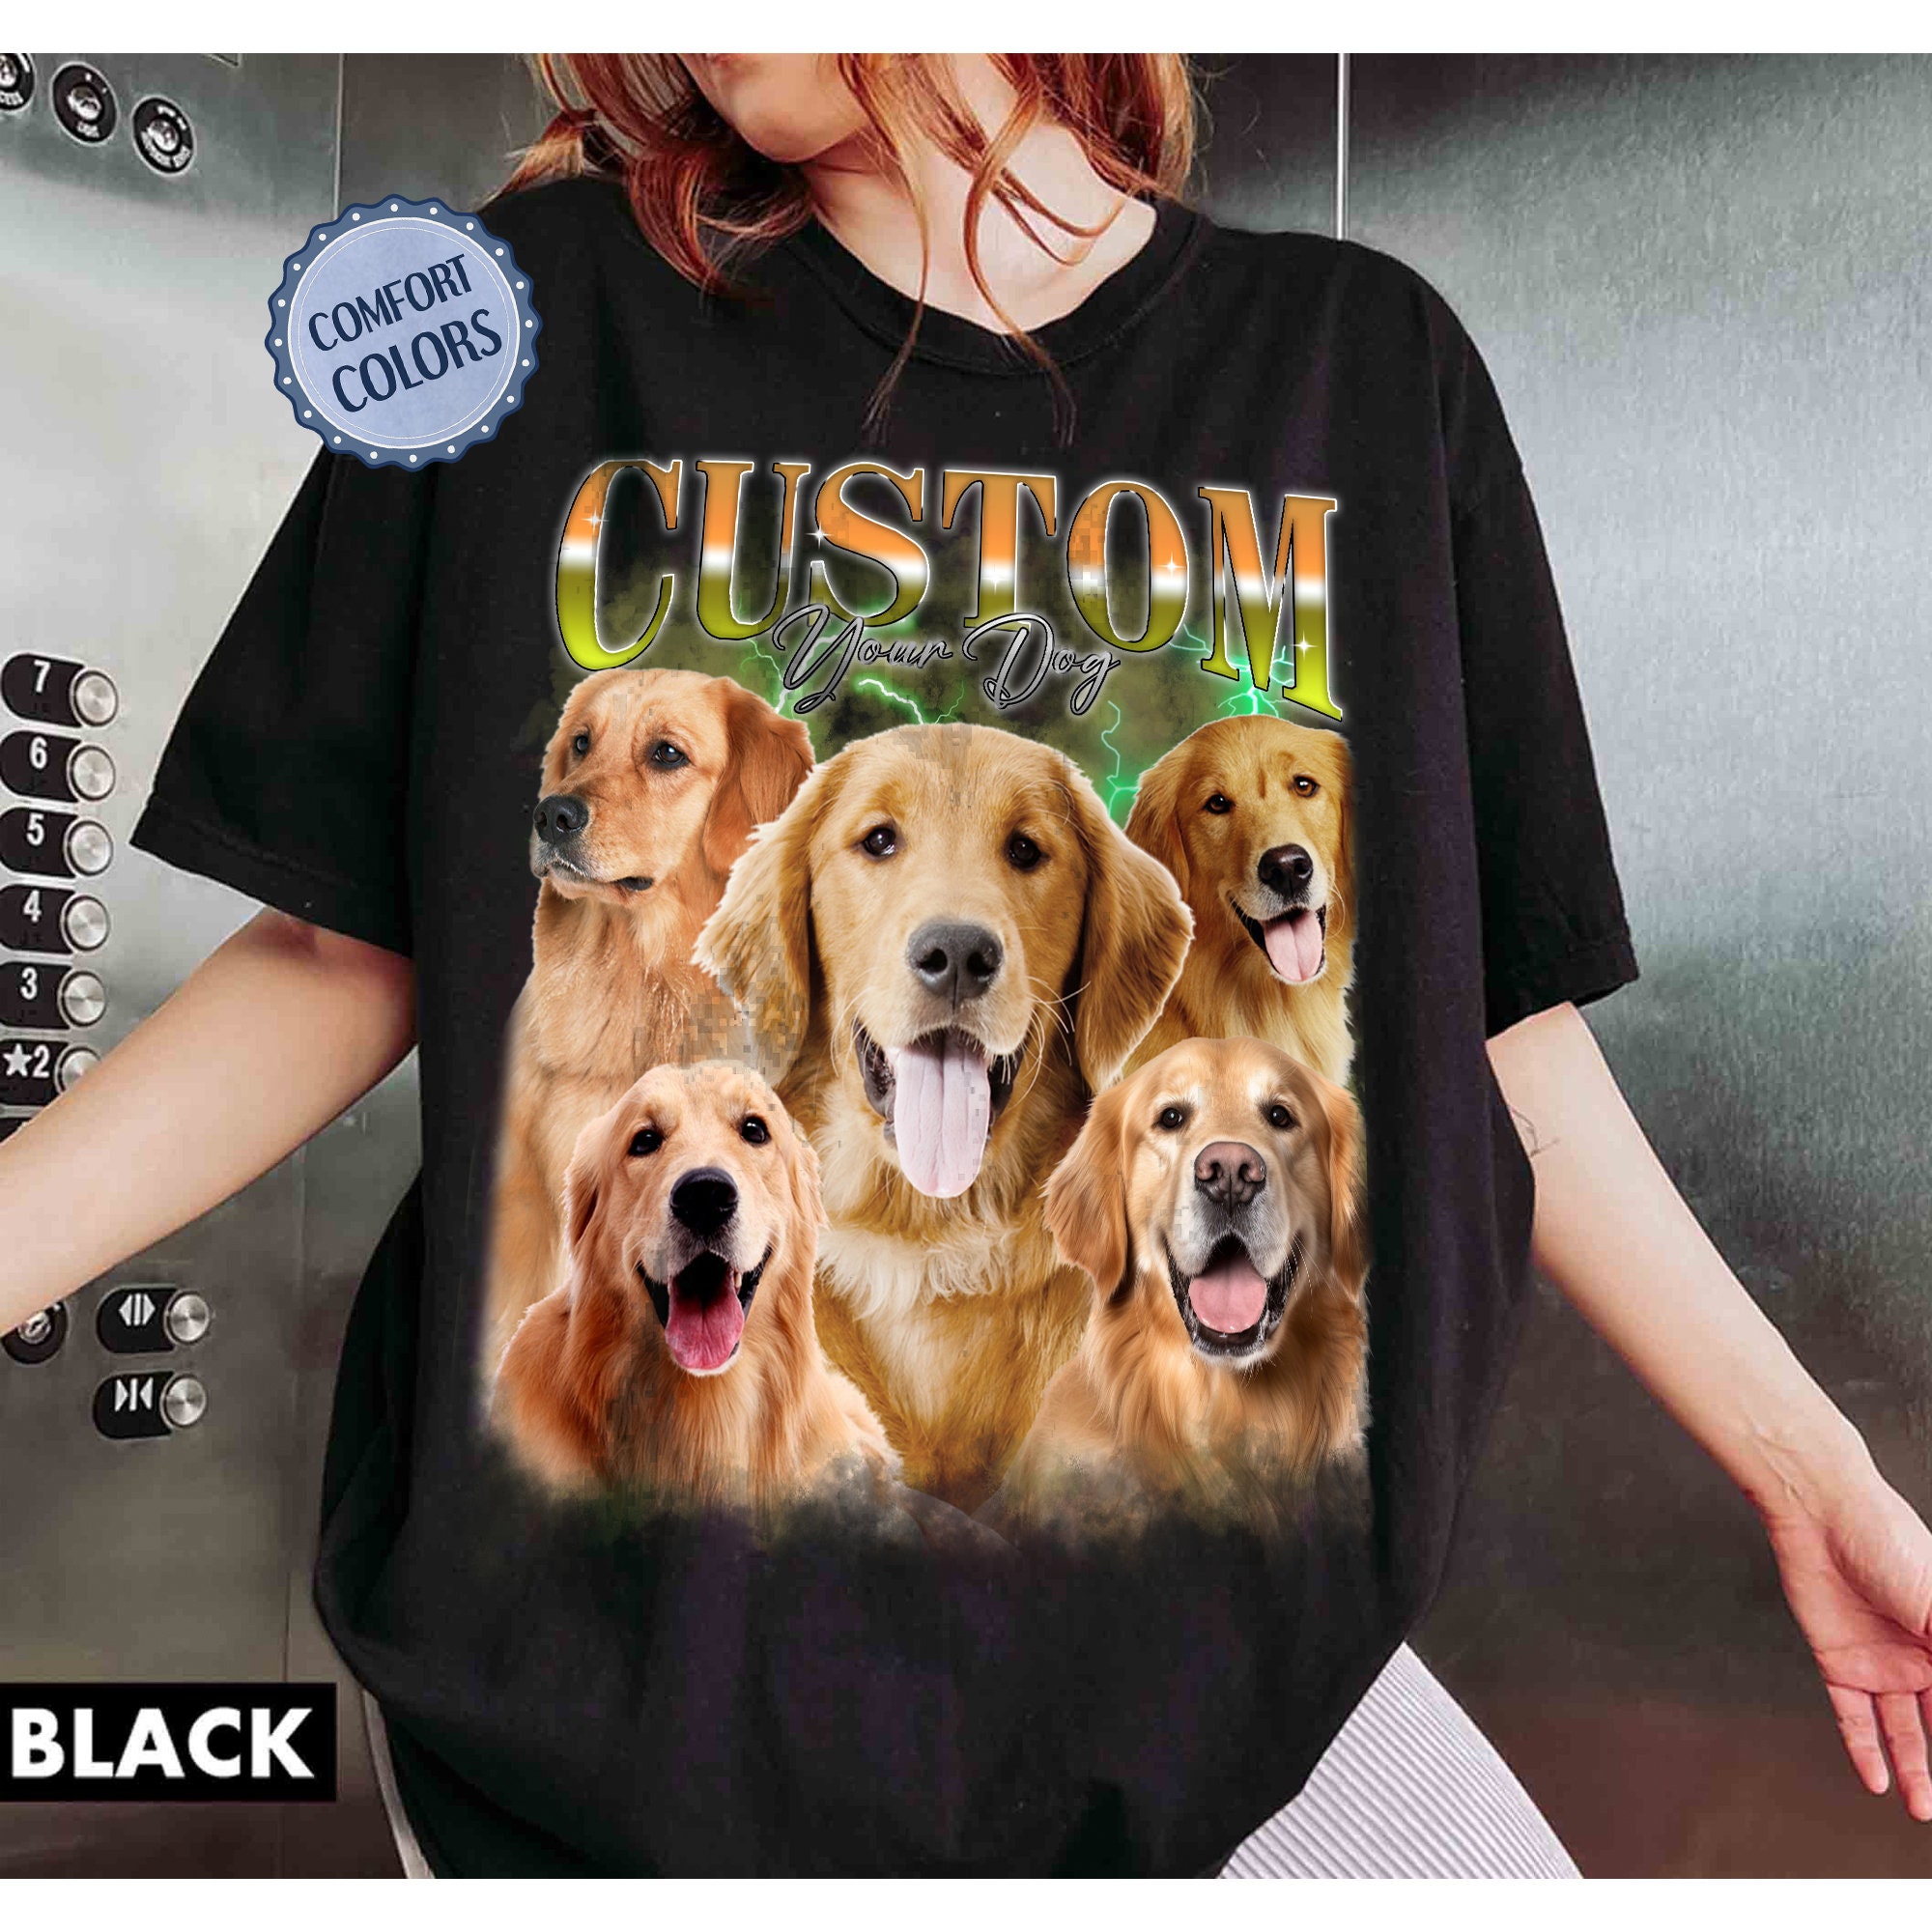 Discover Pet Custom Vintage Washed Shirt, Custom Dog T-Shirt, Dog Bootleg Retro 90's Tee, Custom Pet Photo, Customized Shirt With Dog, Pet Lovers